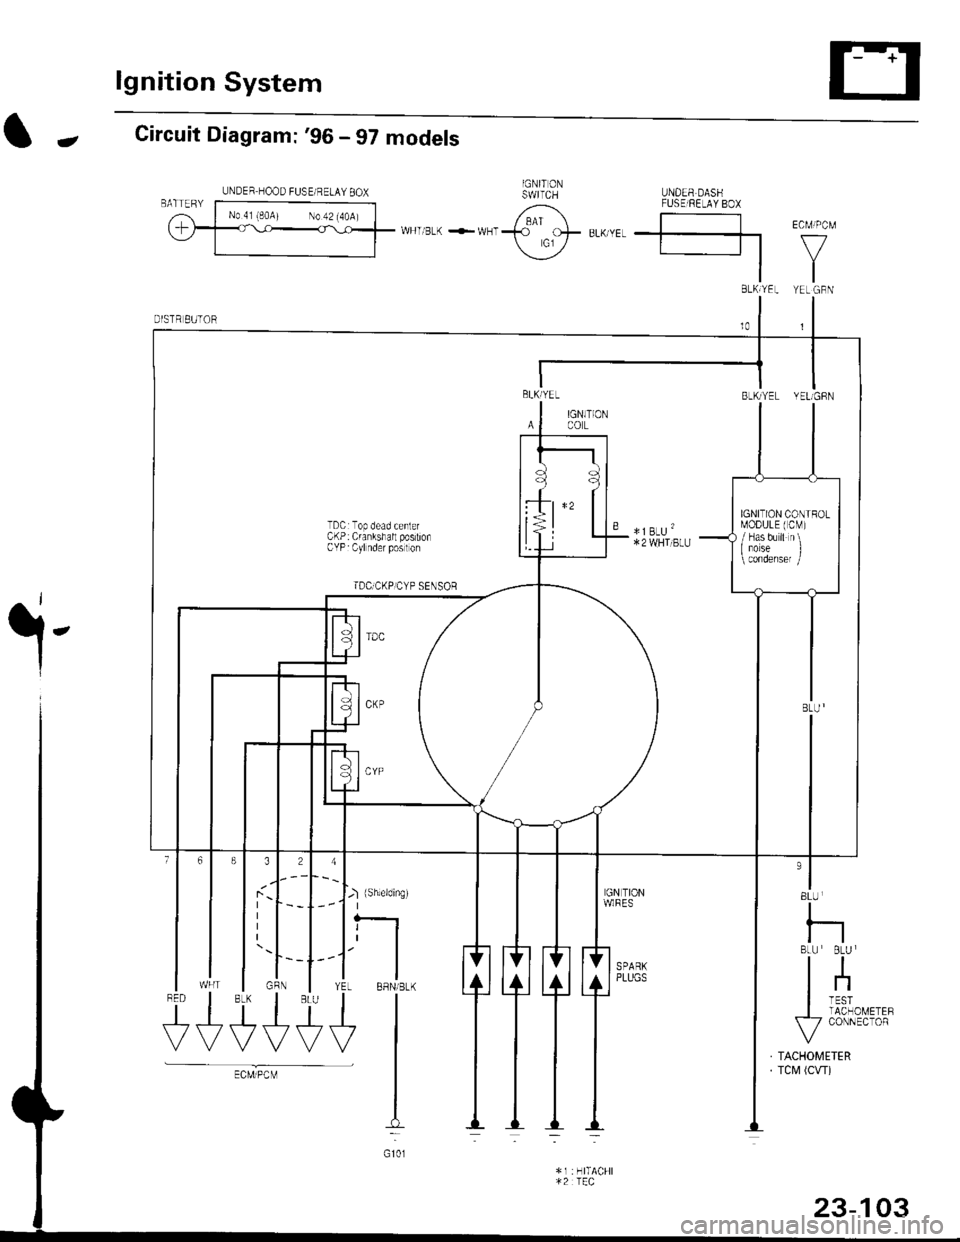 HONDA CIVIC 1996 6.G Workshop Manual lgnition System
-Circuit Diagram: 96 - 97 models
.i-
8LU
I
nBLU BLU I
tl
lnI TESTI TACHOMETEF\-7 CONNECTOR
TACHOMETERTCM (CW)
J-) {sh,eldinsrt I
tfYEL BBN/BLK
+l
I:
G101
$t+++
UNDER HOOD FUSE/ RELAY